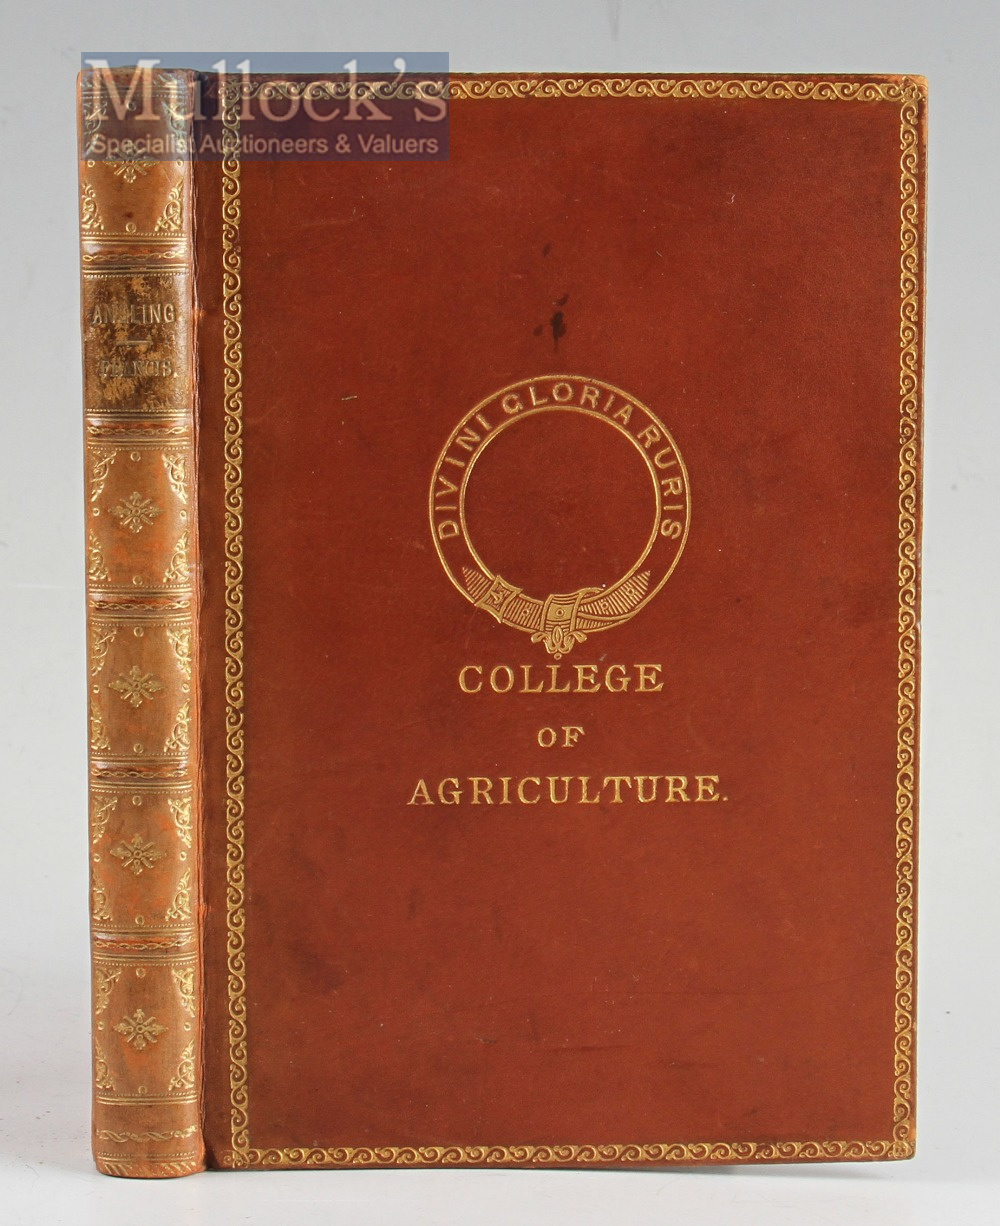 Fishing Book - Francis, Francis - “Angling” 1883, 2nd Ed, London, full calf binding with gold